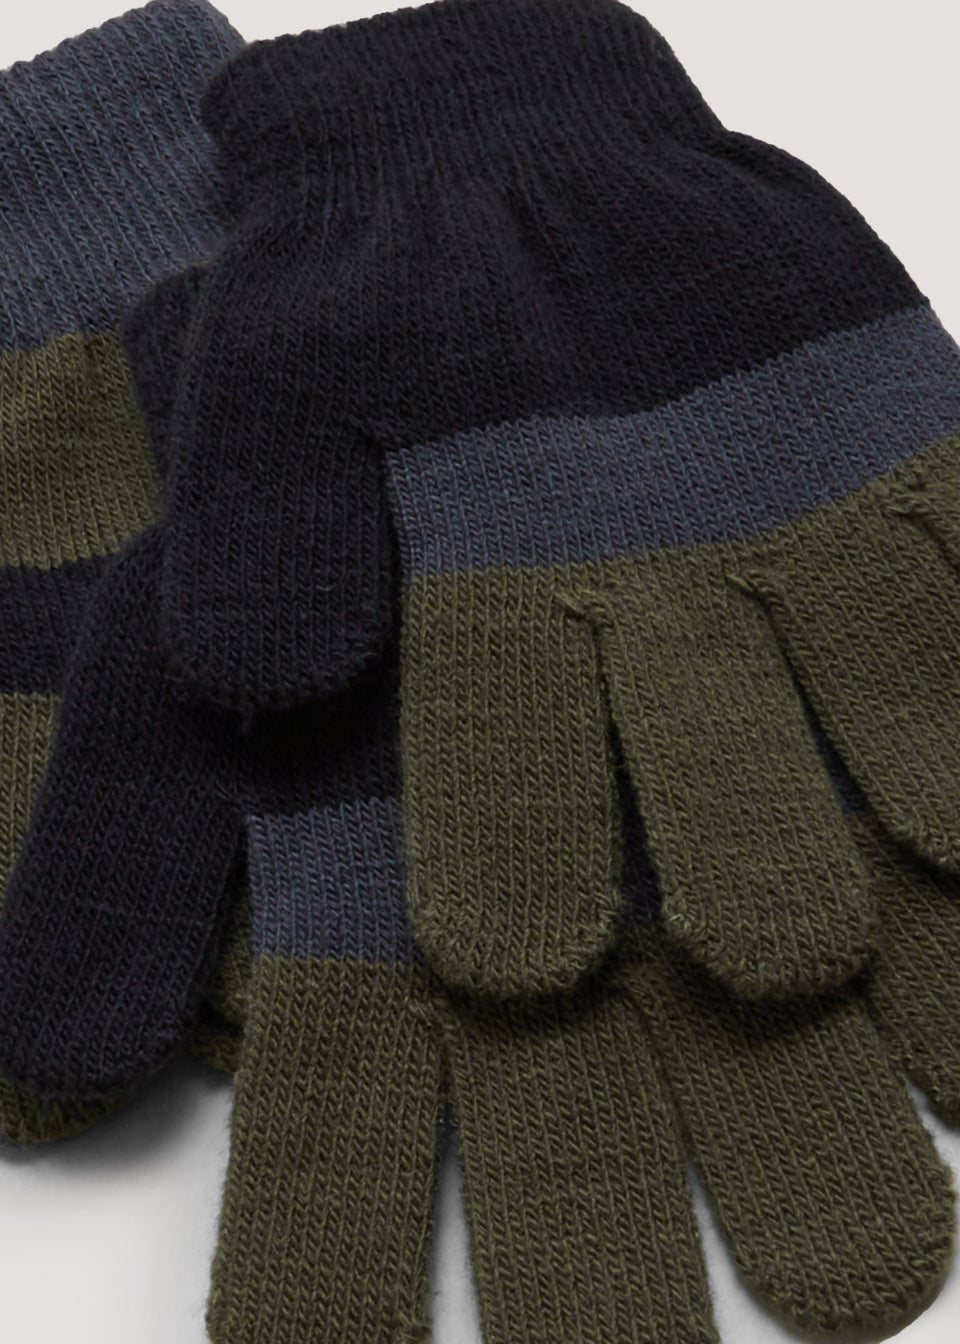 Boys 2 Pack Navy & Khaki Stripe Magic Gloves